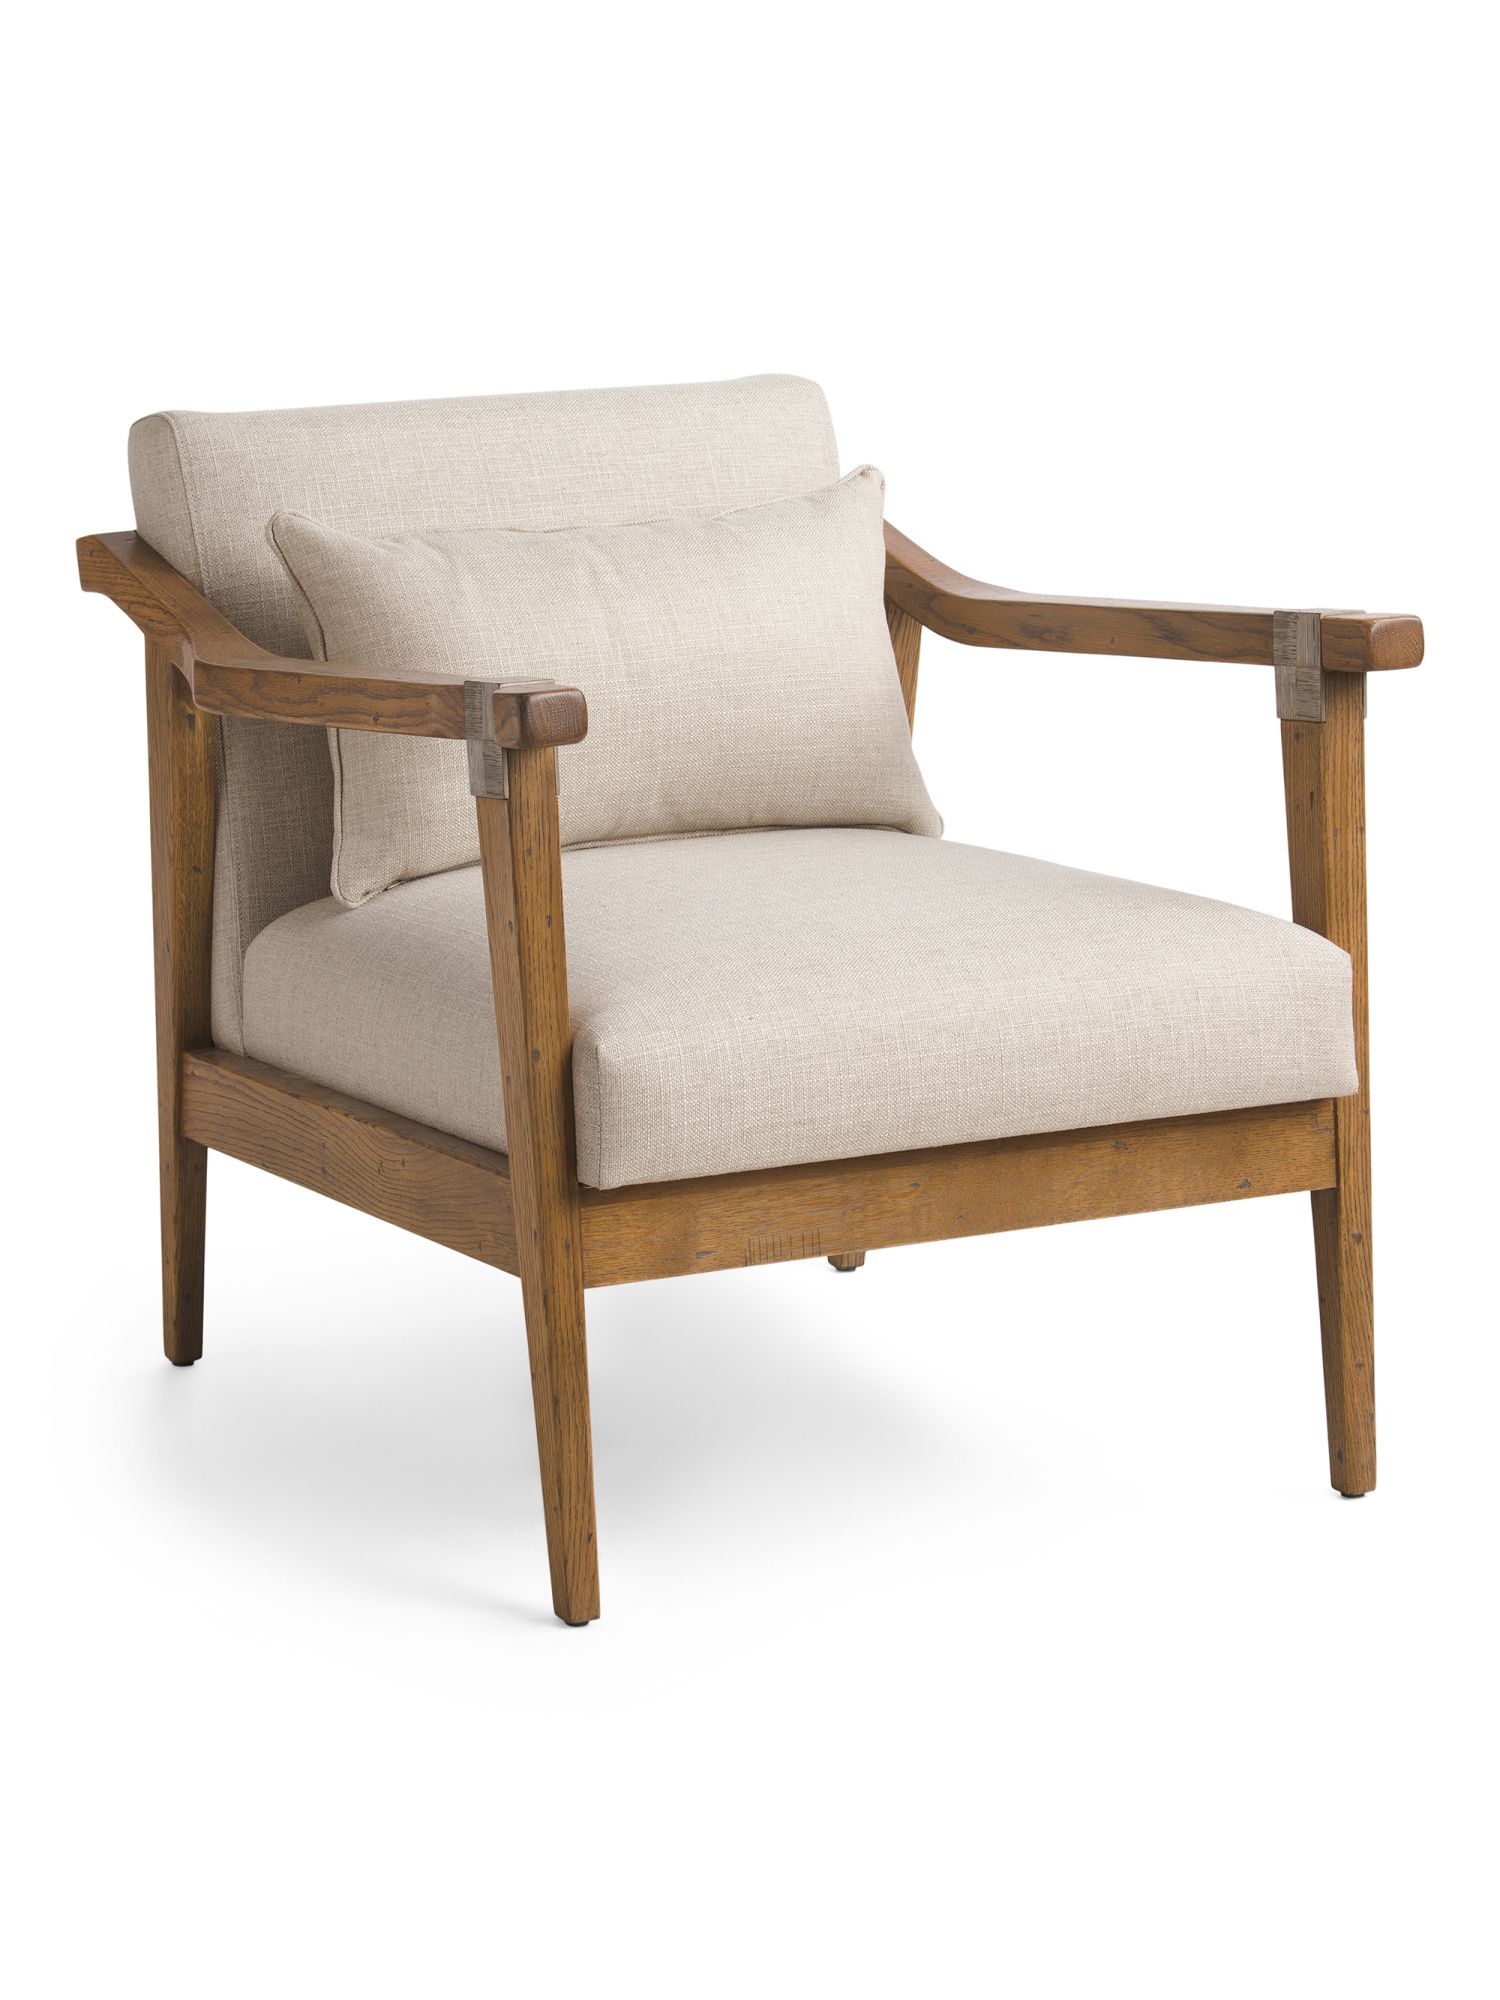 Bryson Upholstered Chair | TJ Maxx